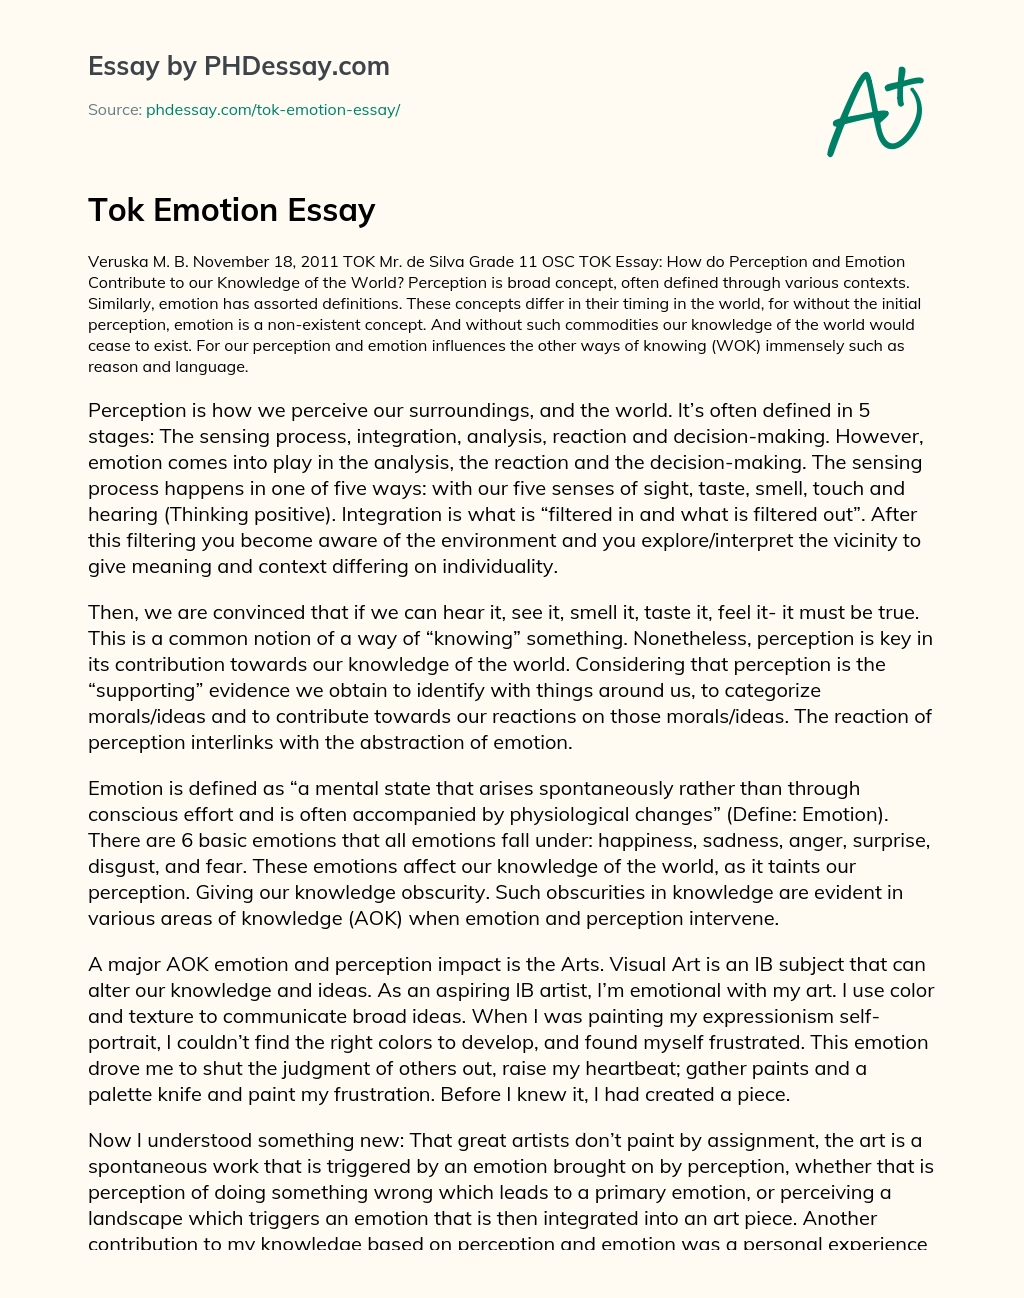 Tok Emotion Essay essay